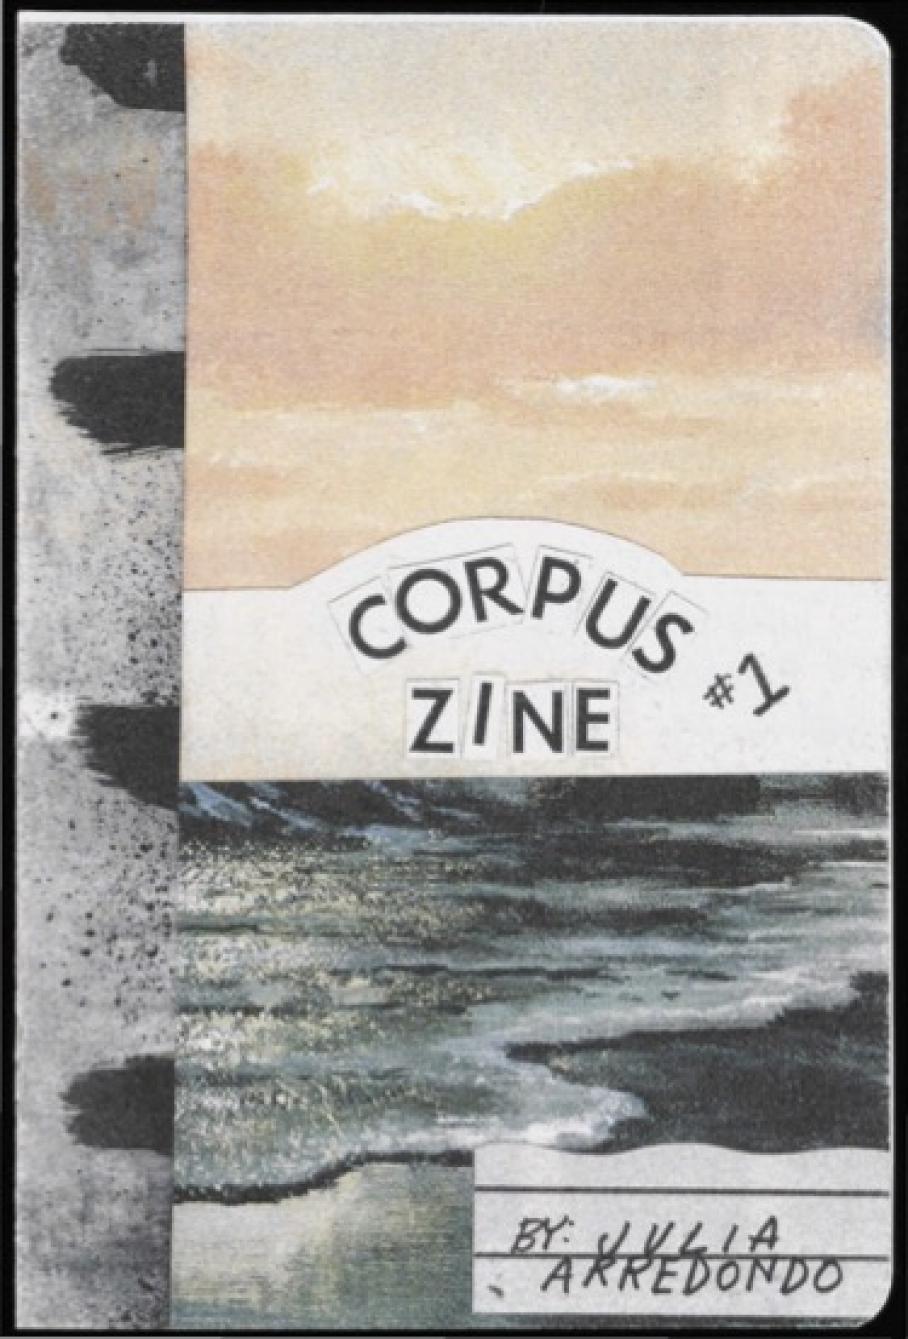 cover of zine